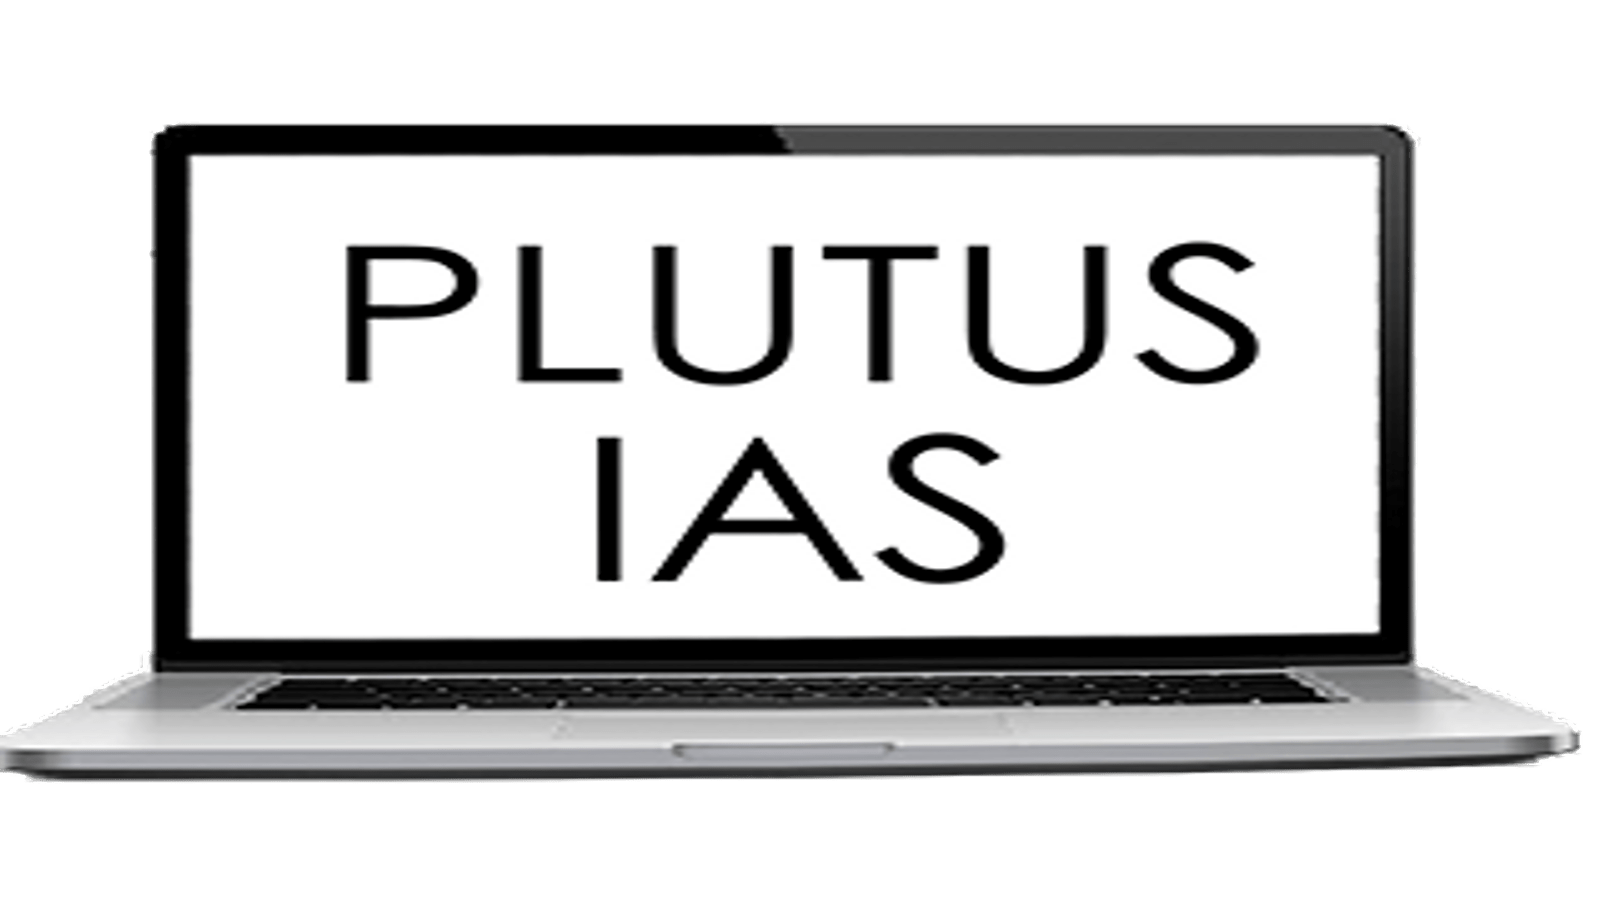 Plutus IAS Online Coaching Gujrat